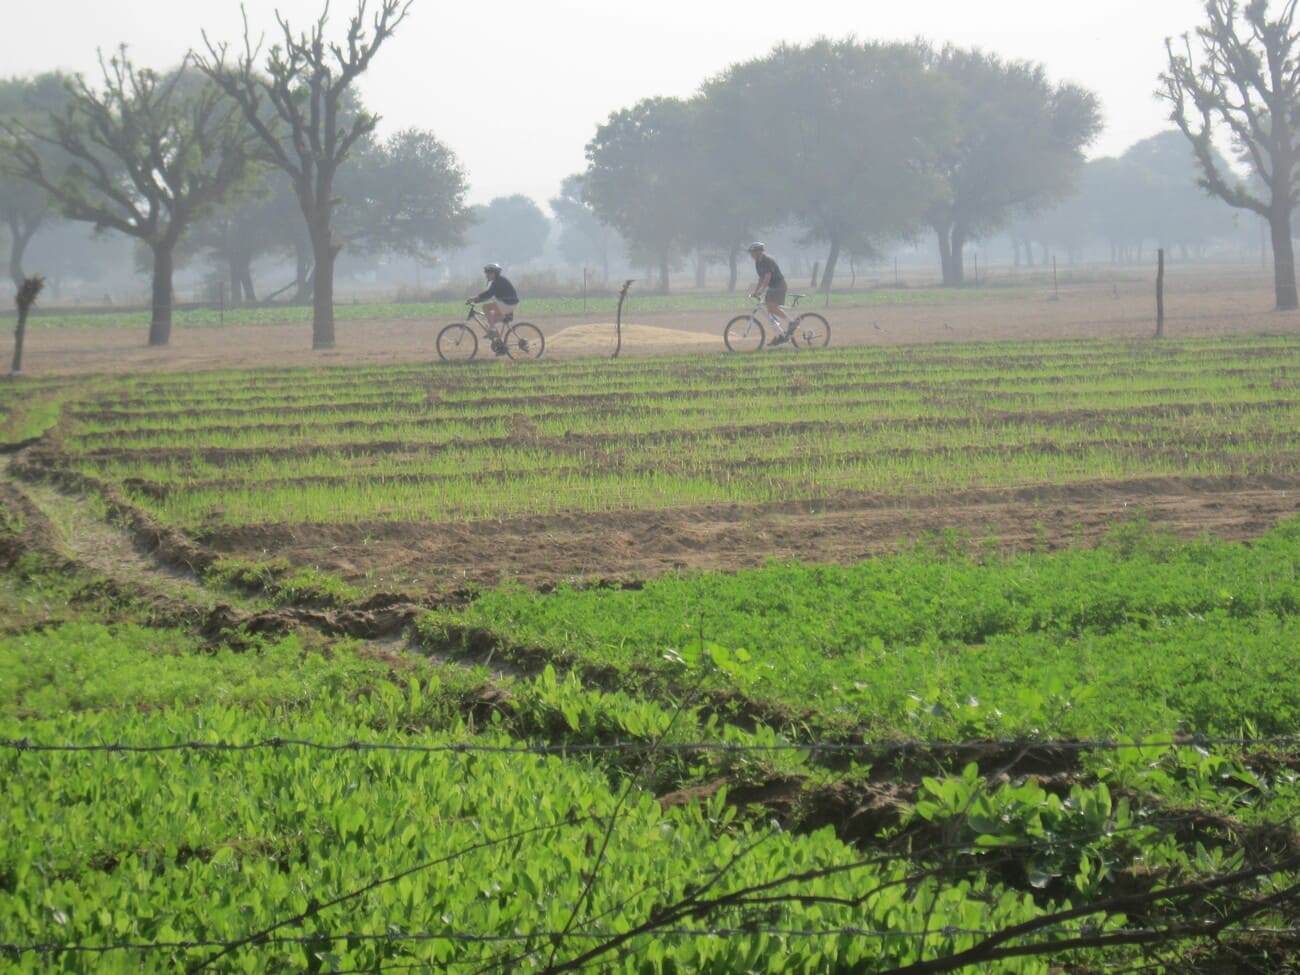 Two cyclists riding through green farmlands